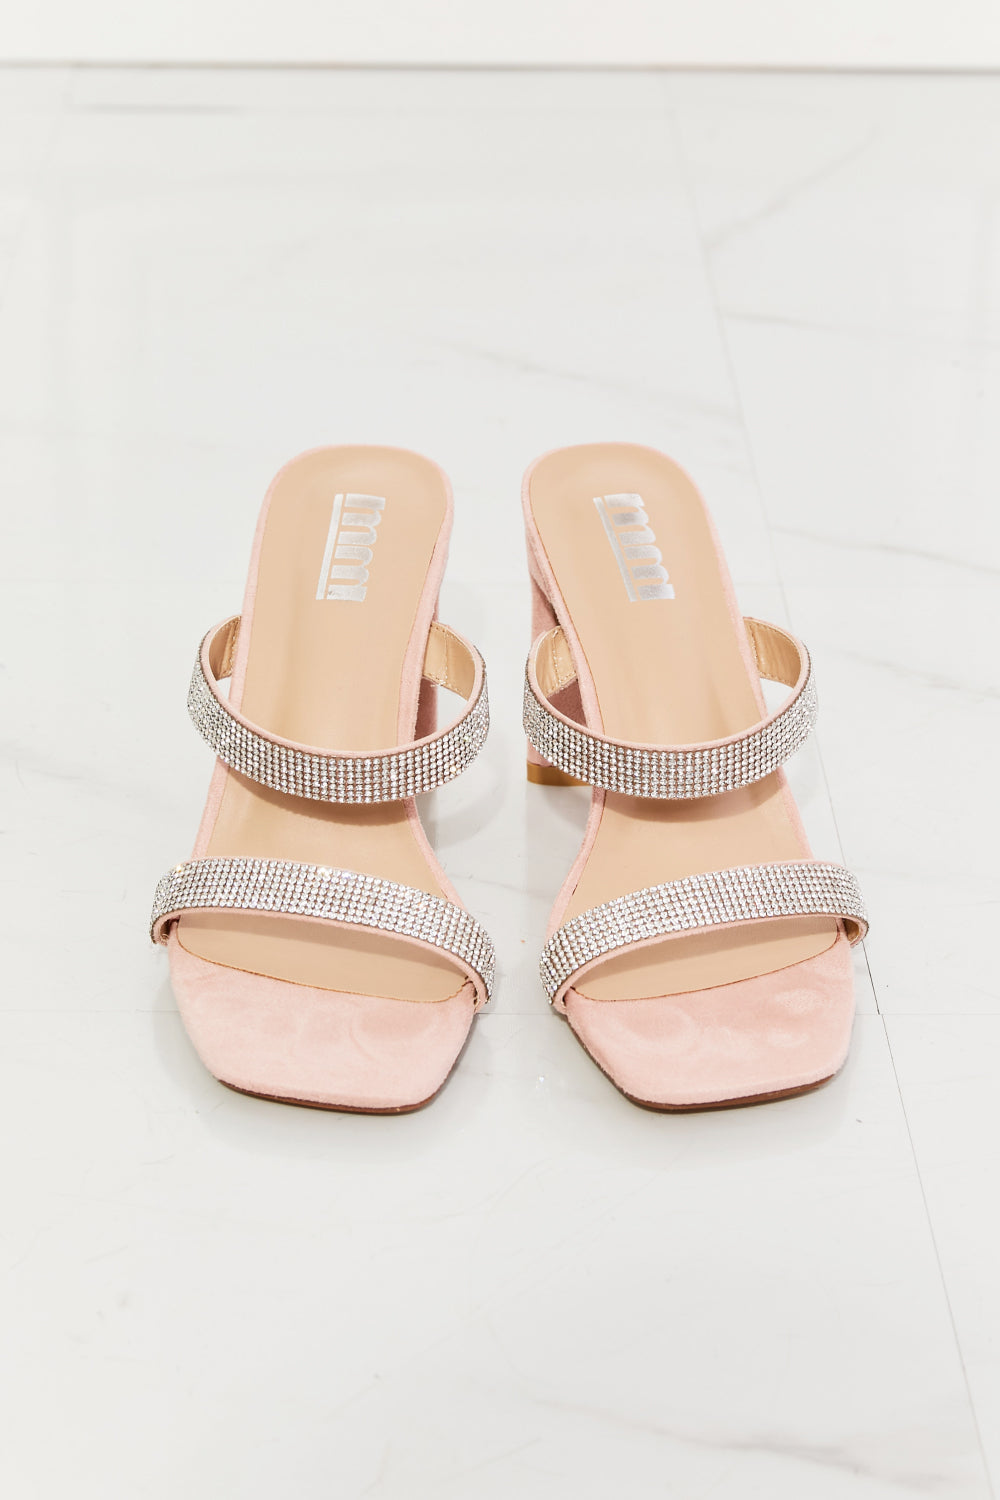 MMShoes Leave A Little Sparkle Rhinestone Block Heel Sandal in Pink - nailedmoms